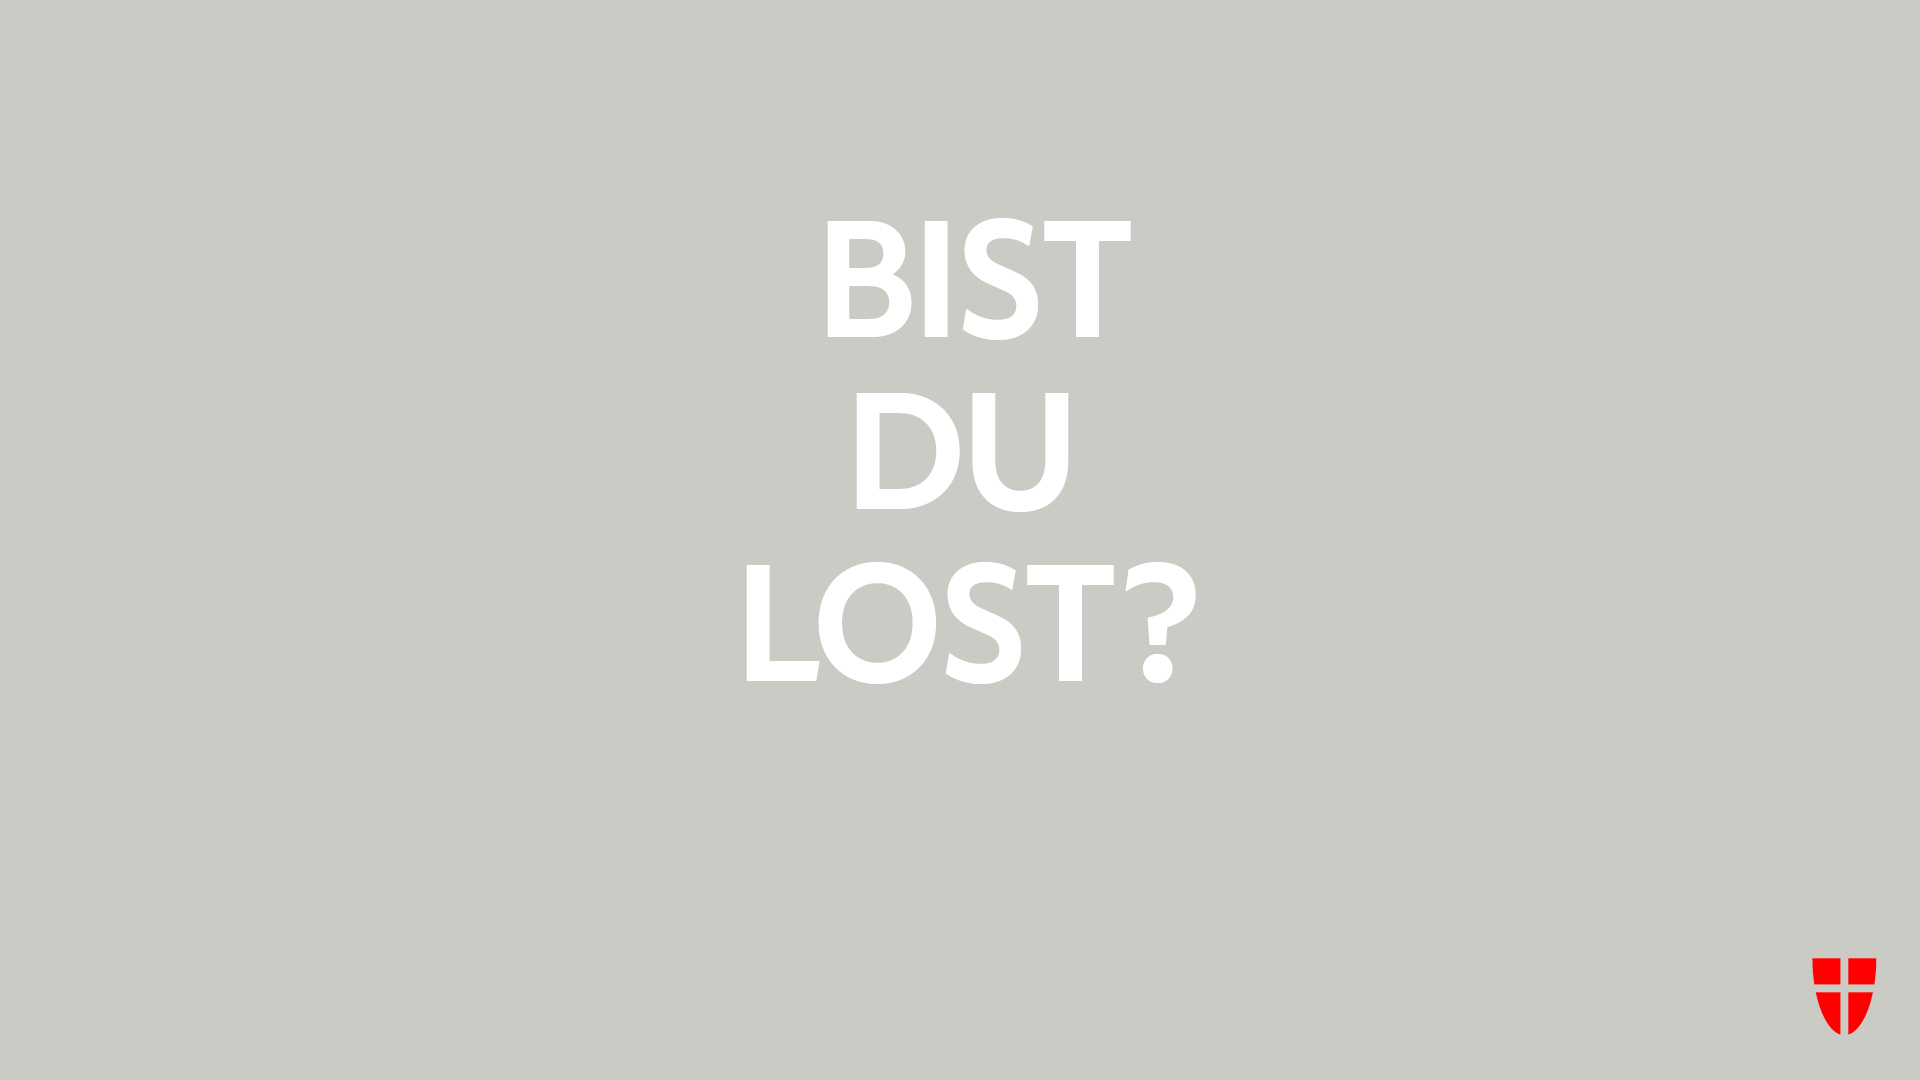 MORITZ WIZANY – STADT WIEN – Idee der Kampagne ›Bist du Lost?‹